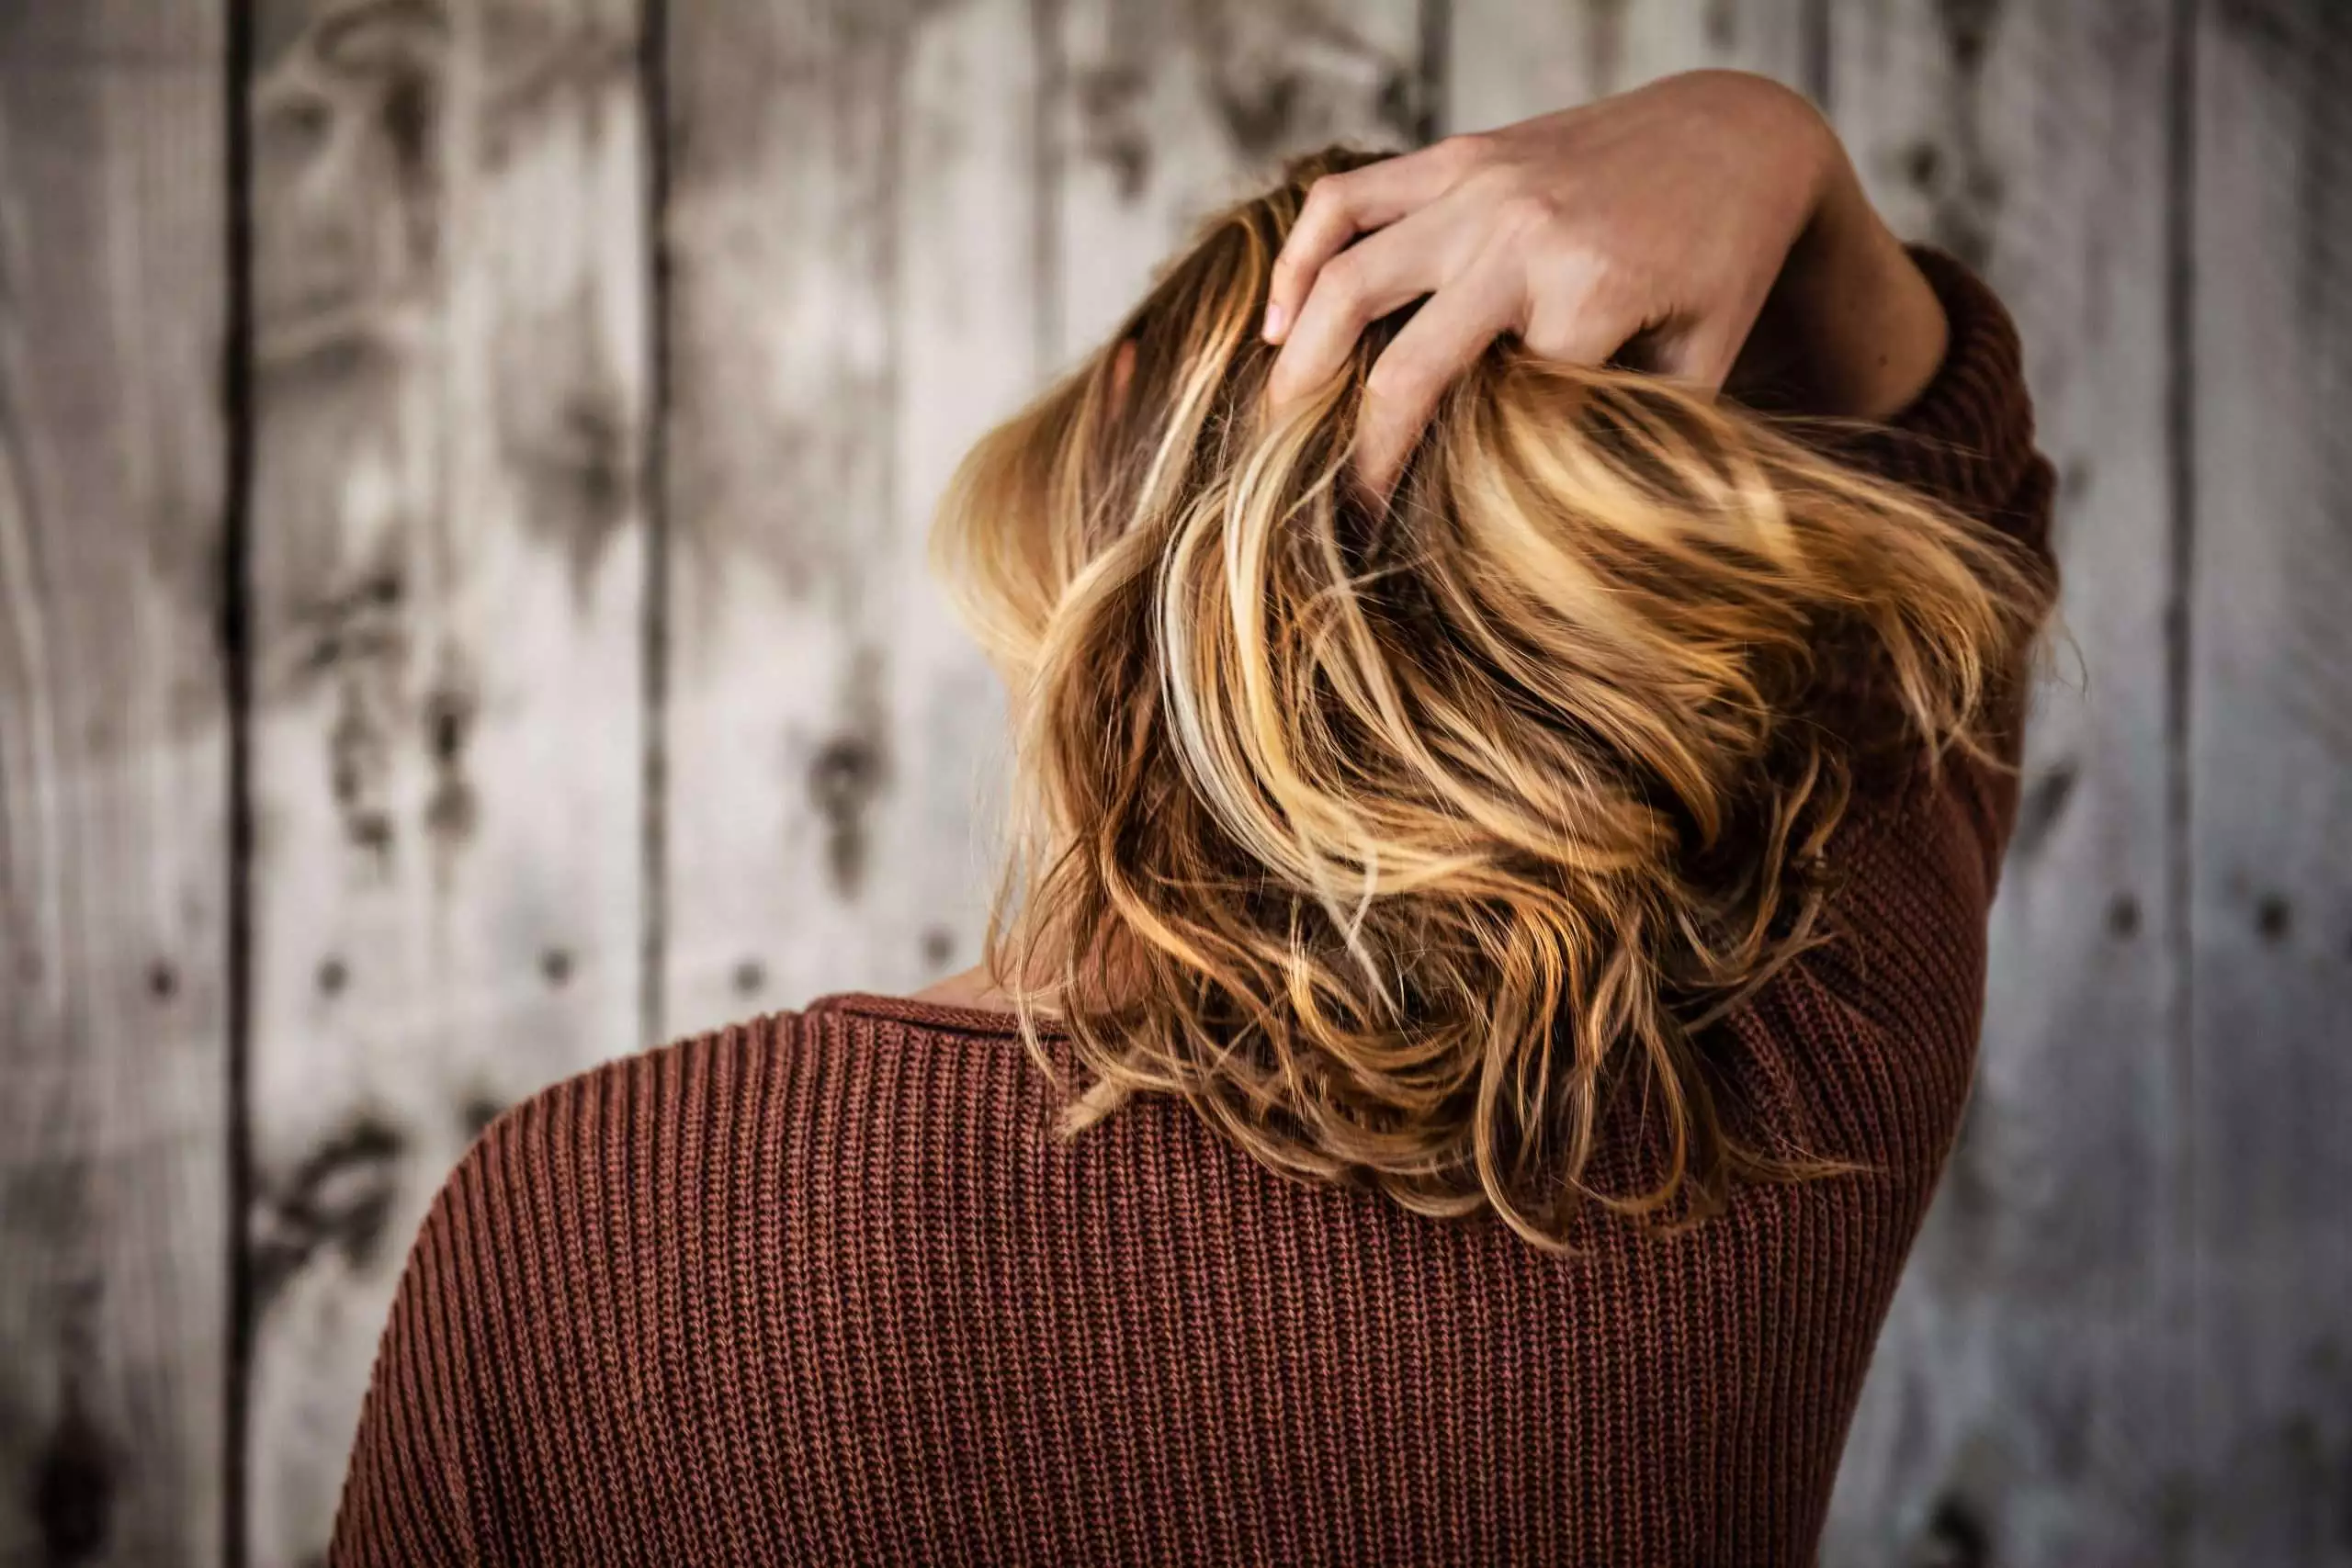 How to treat dry scalp